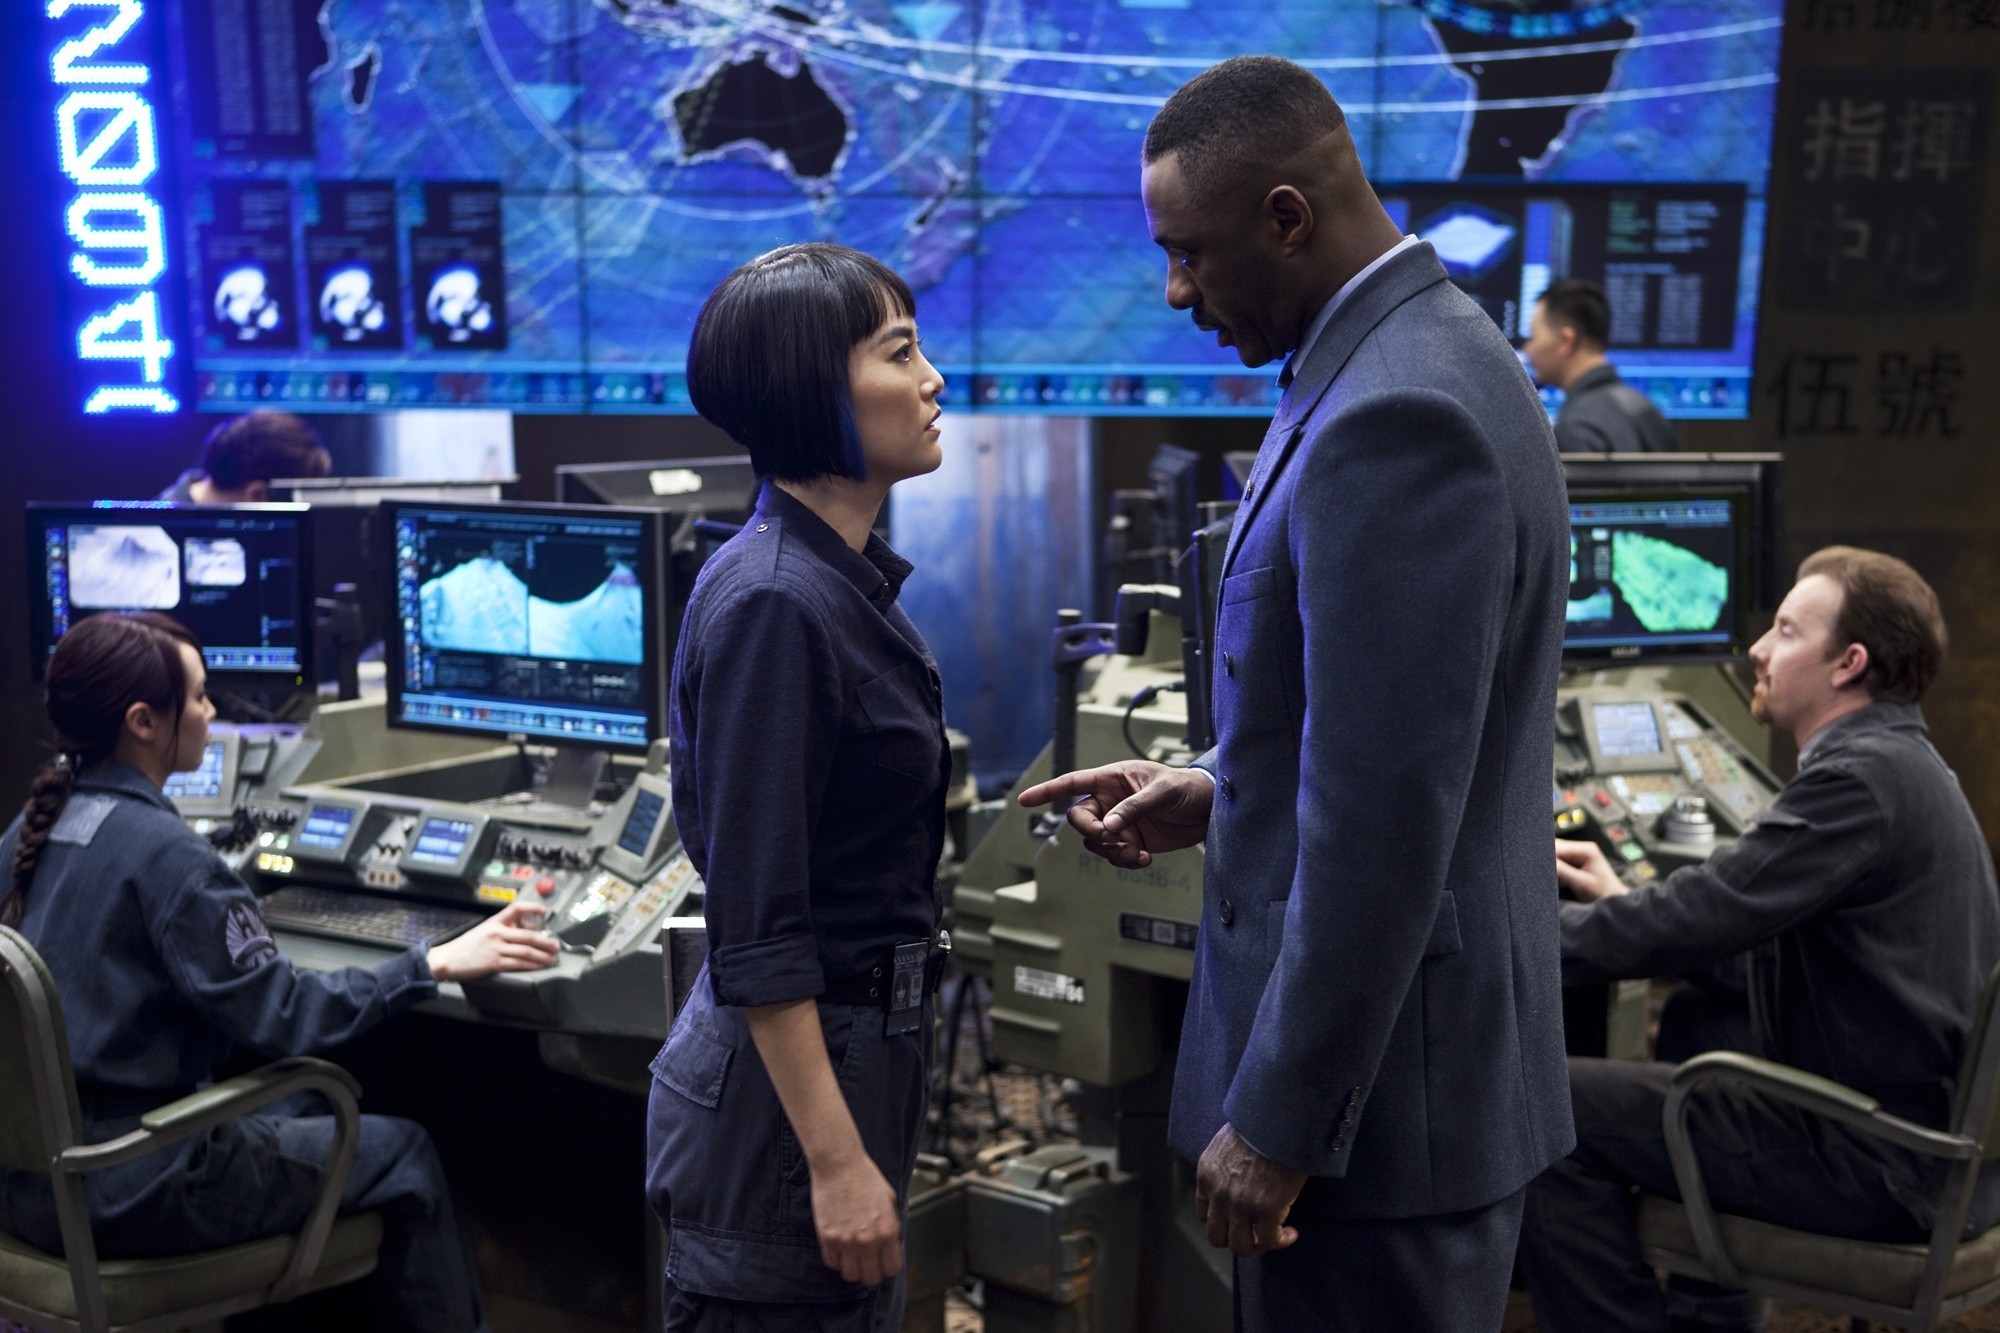 Rinko Kikuchi stars as Mako Mori and Idris Elba stars as Stacker Pentecost in Warner Bros. Pictures' Pacific Rim (2013)